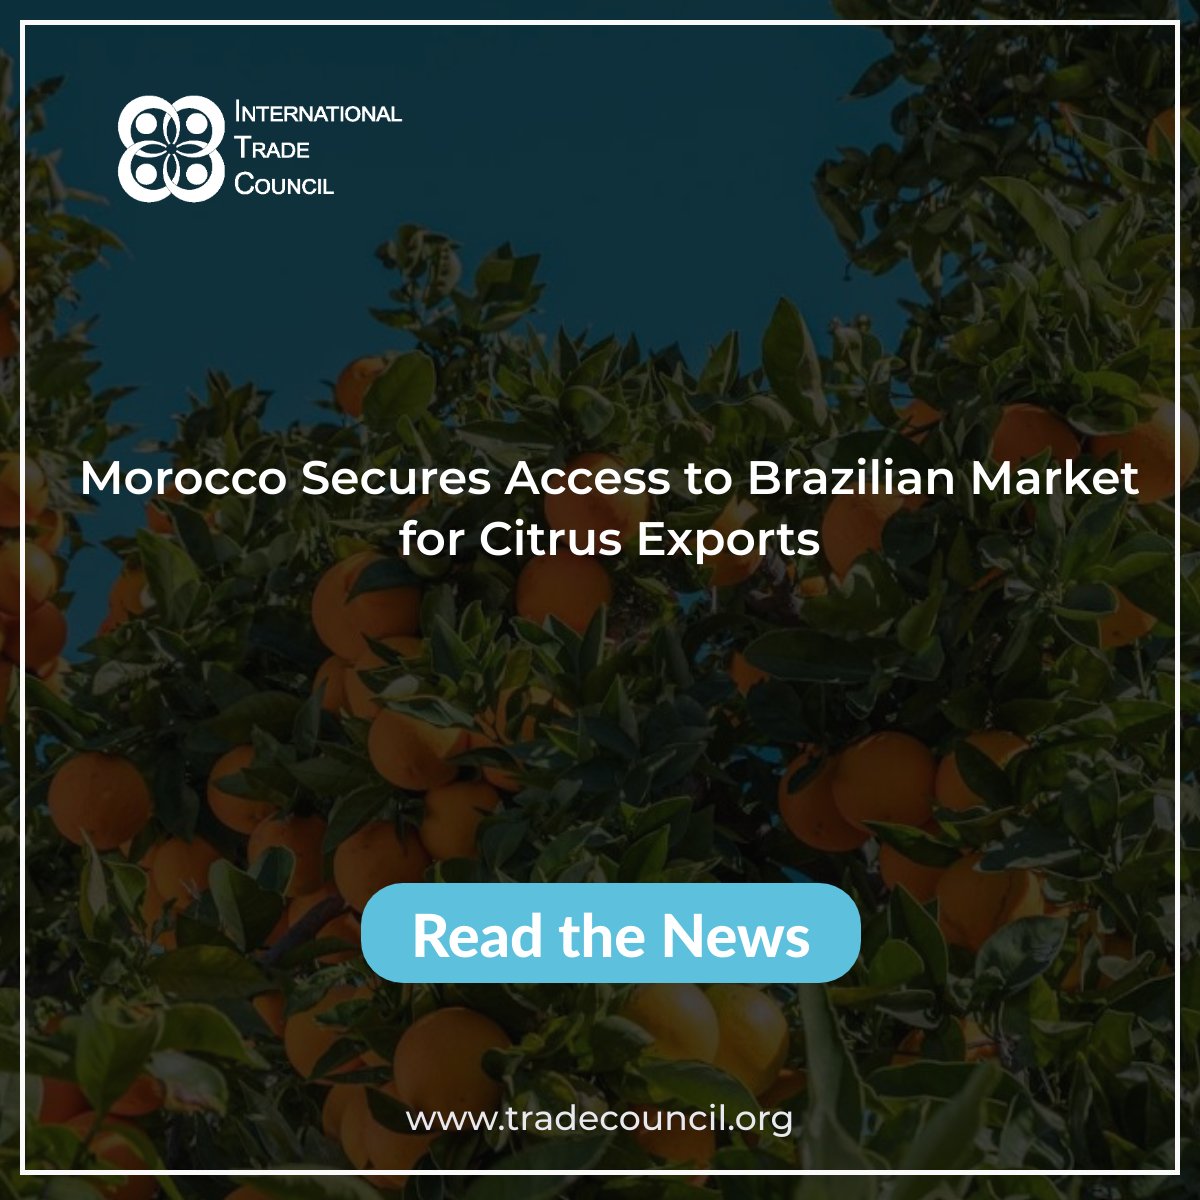 Morocco Secures Access to Brazilian Market for Citrus Exports
Read The News: 
tradecouncil.org/morocco-secure…
#ITCNewsUpdates #BreakingNews #CitrusExports #MoroccoBrazilTrade #InternationalTrade #EconomicDevelopment #TradeRelations